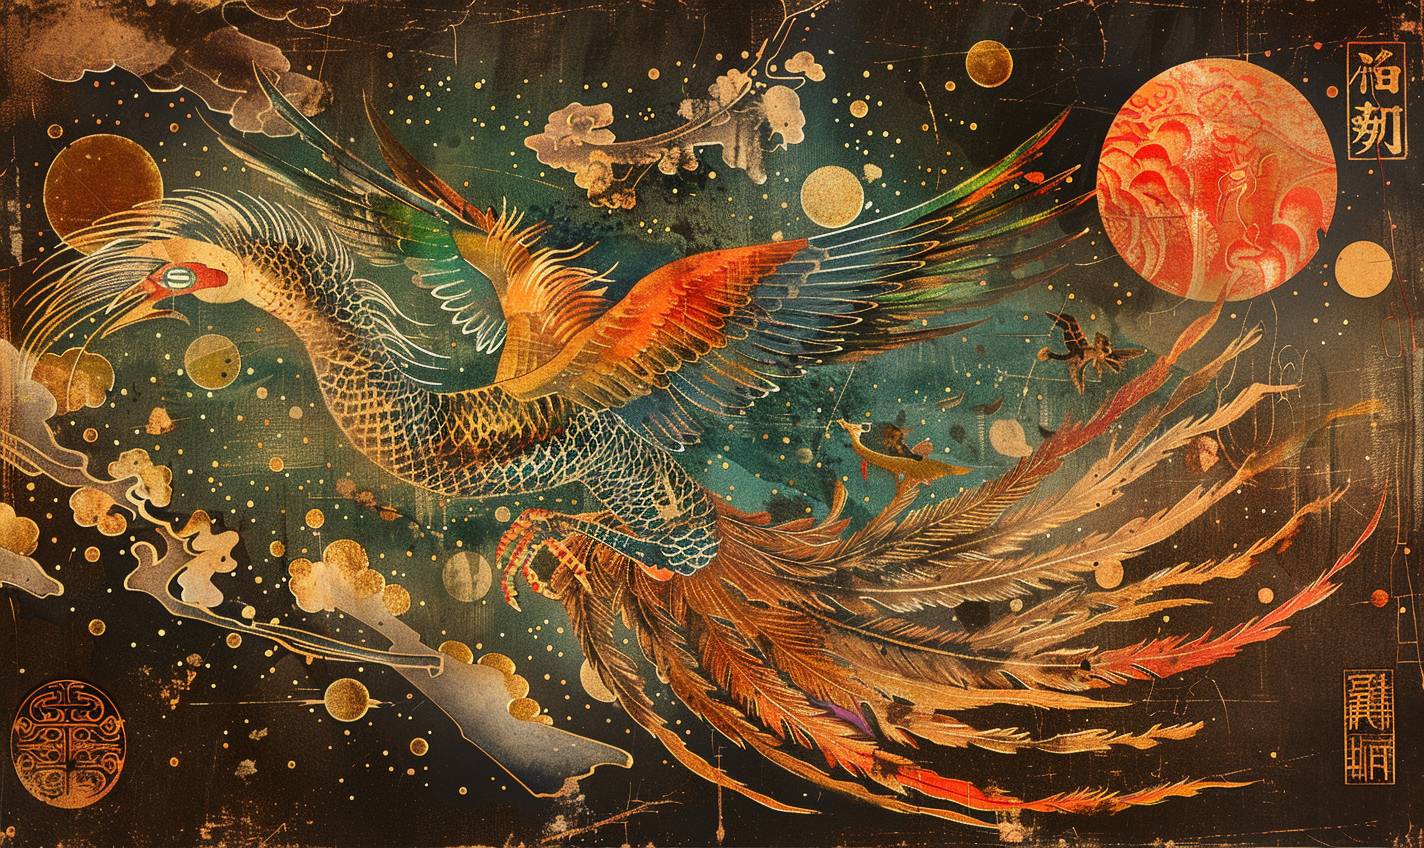 In the style of Utagawa Kuniyoshi, Cosmic phoenix gliding through the cosmos